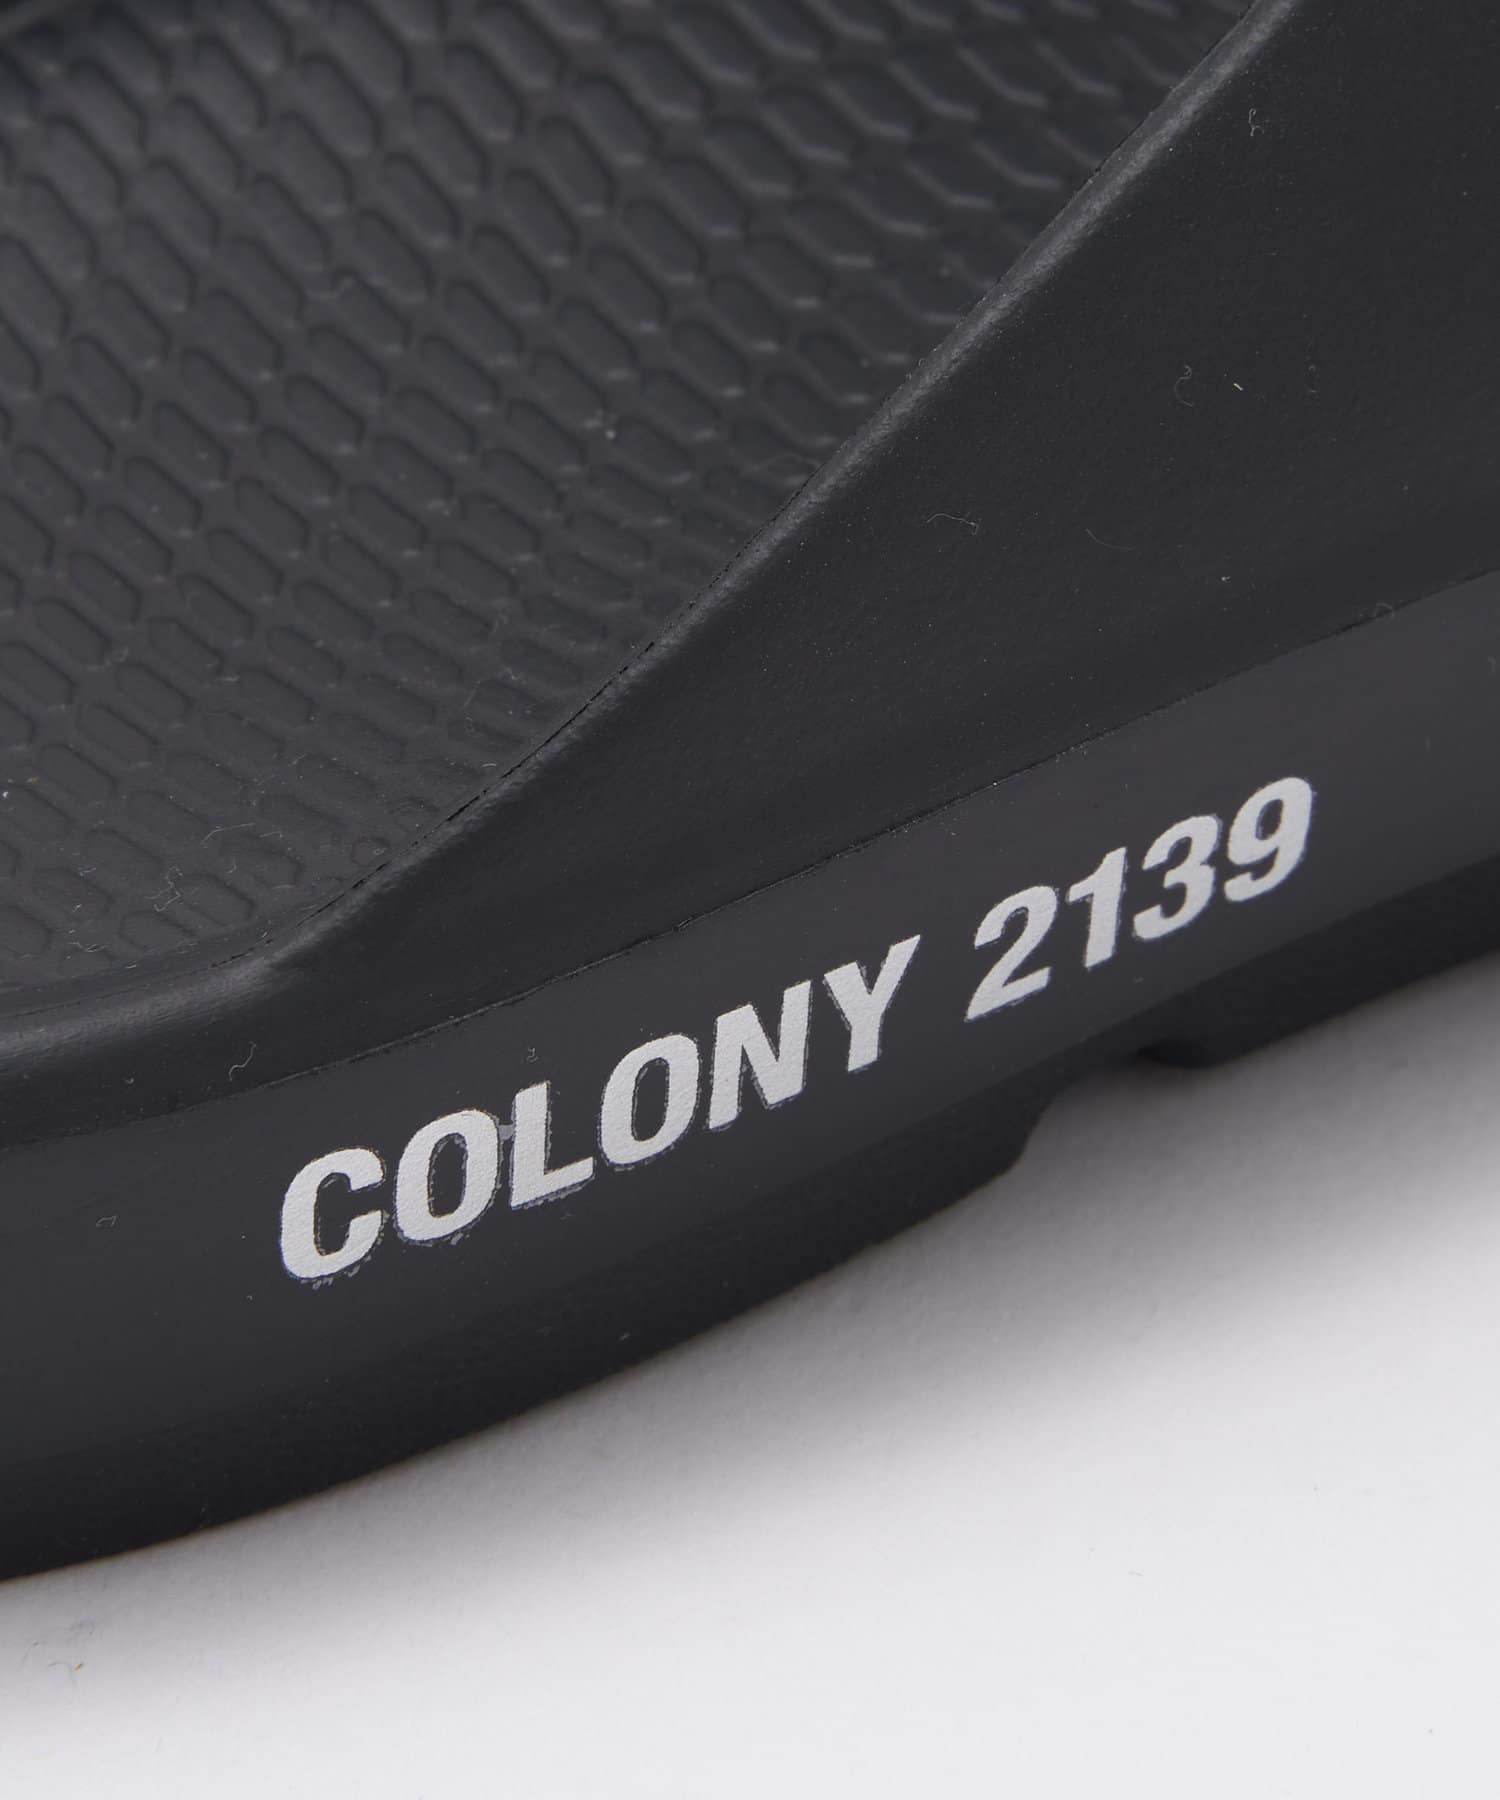 COLONY 2139(コロニー トゥーワンスリーナイン) コンフォートトングサンダル